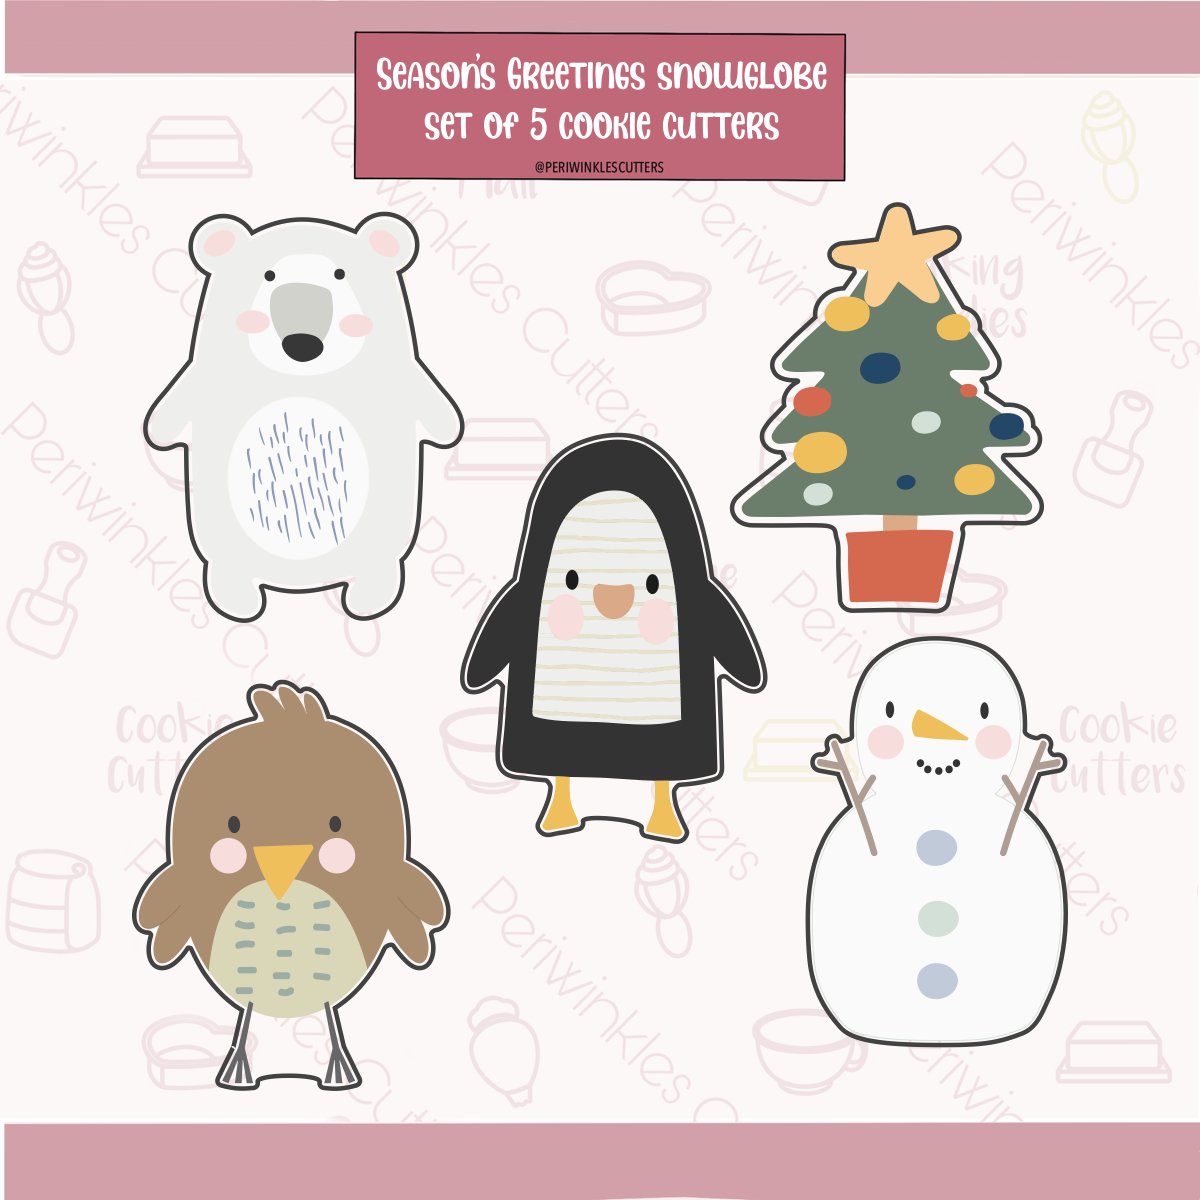 Elf Snow Globe Friend Set of 5 Cookie Cutter - Periwinkles Cutters Cookie Cutter